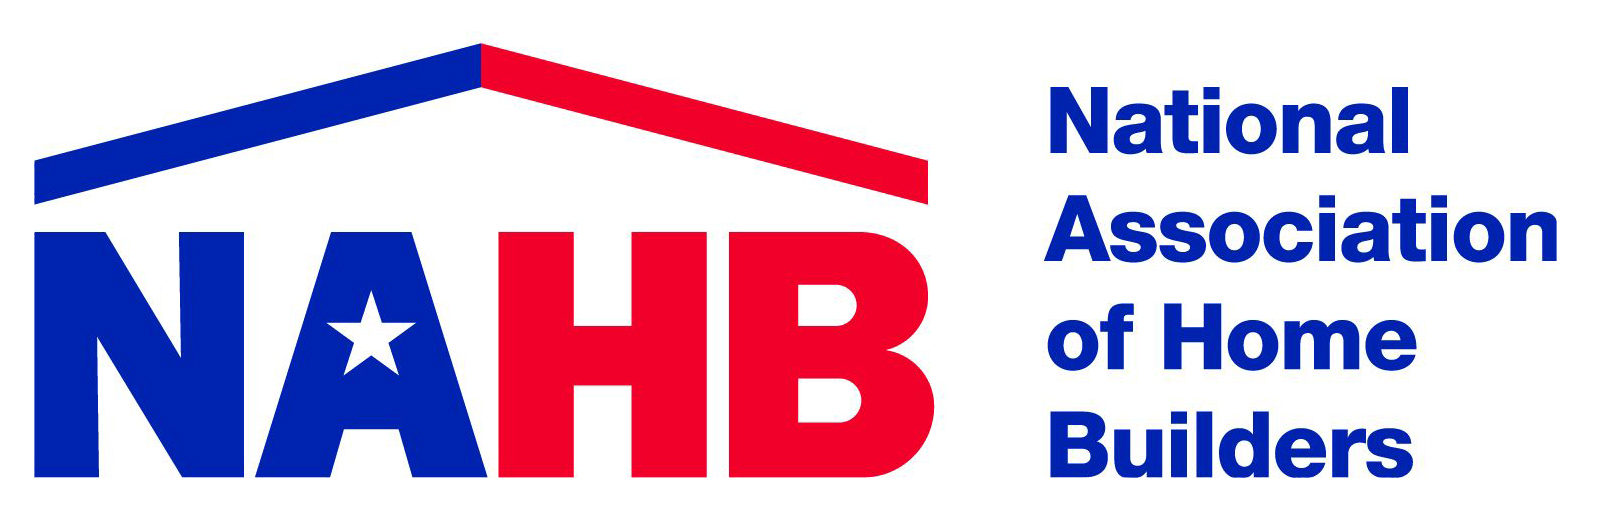 NAHB-Color-Logo.jpg